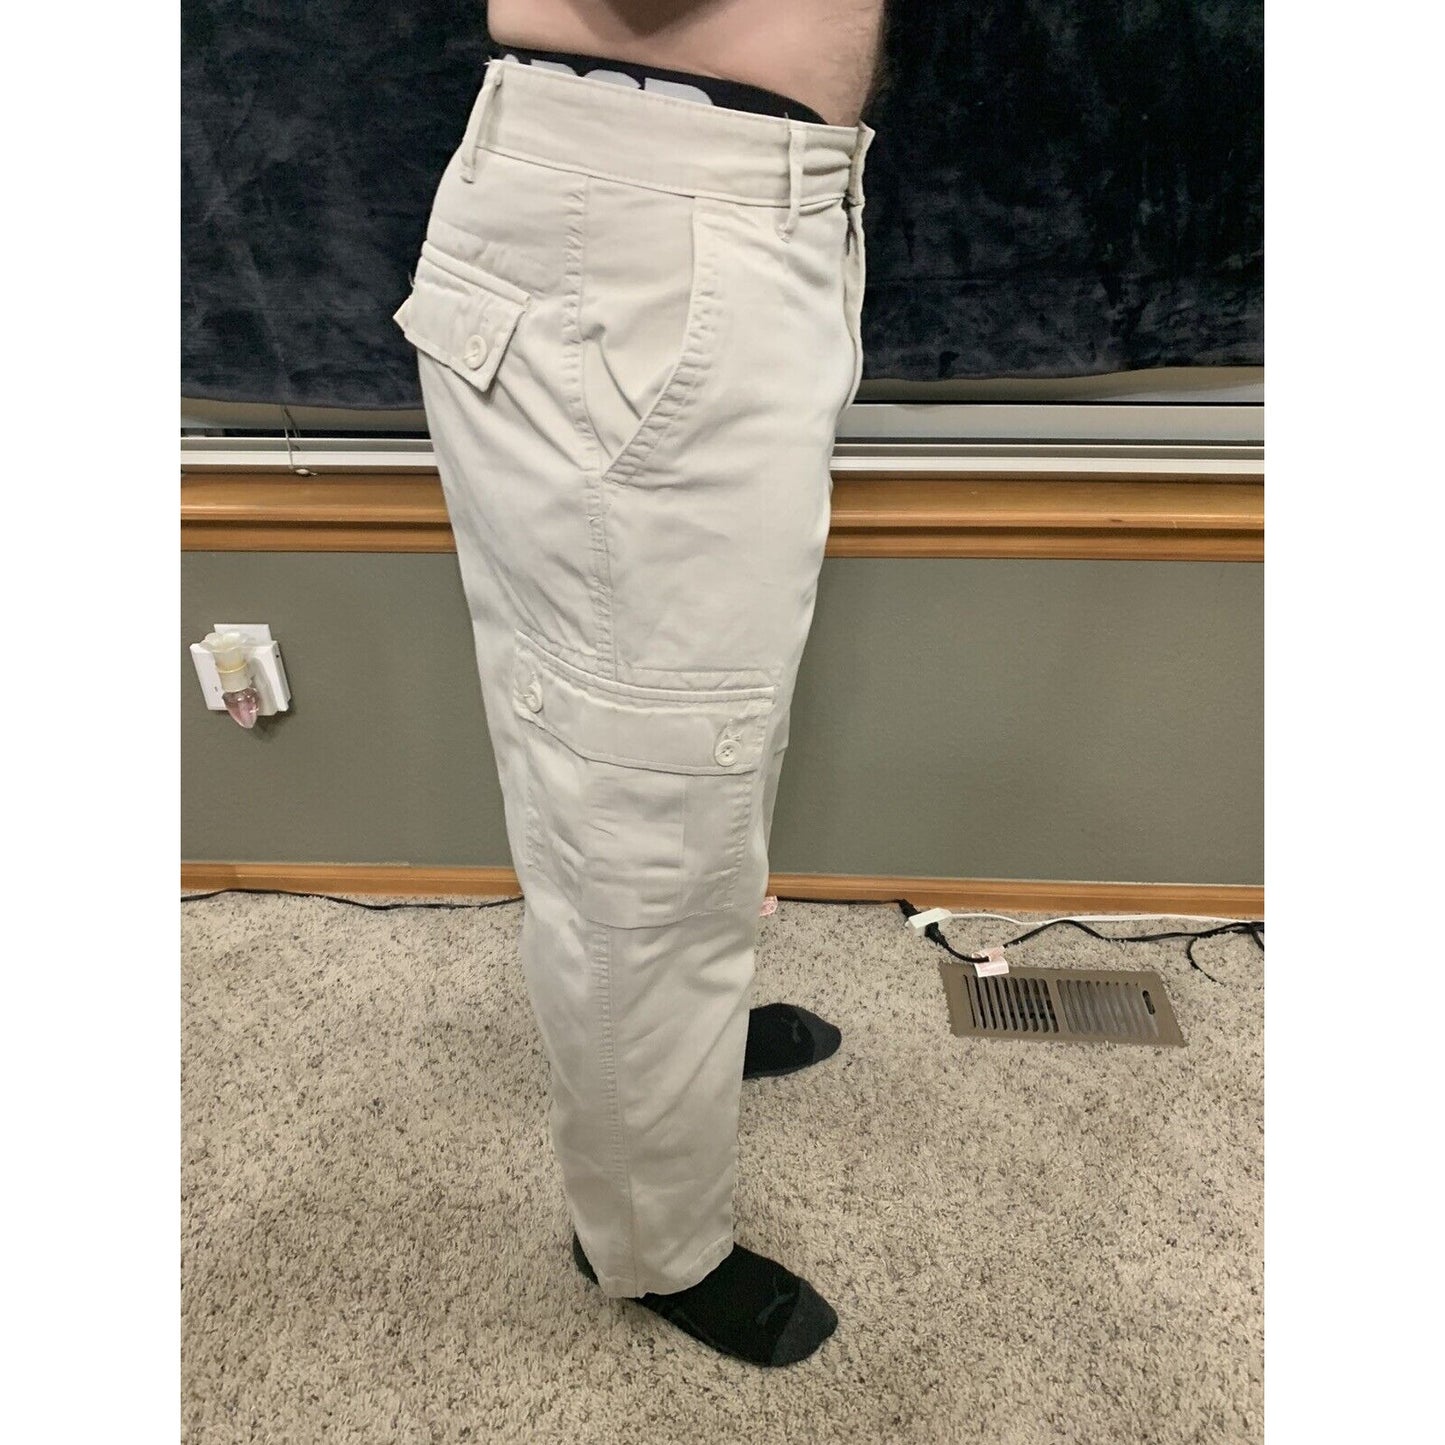 Arizona Jean Men’s Size 33/30 Relaxed Multi Pocket Khaki Pants